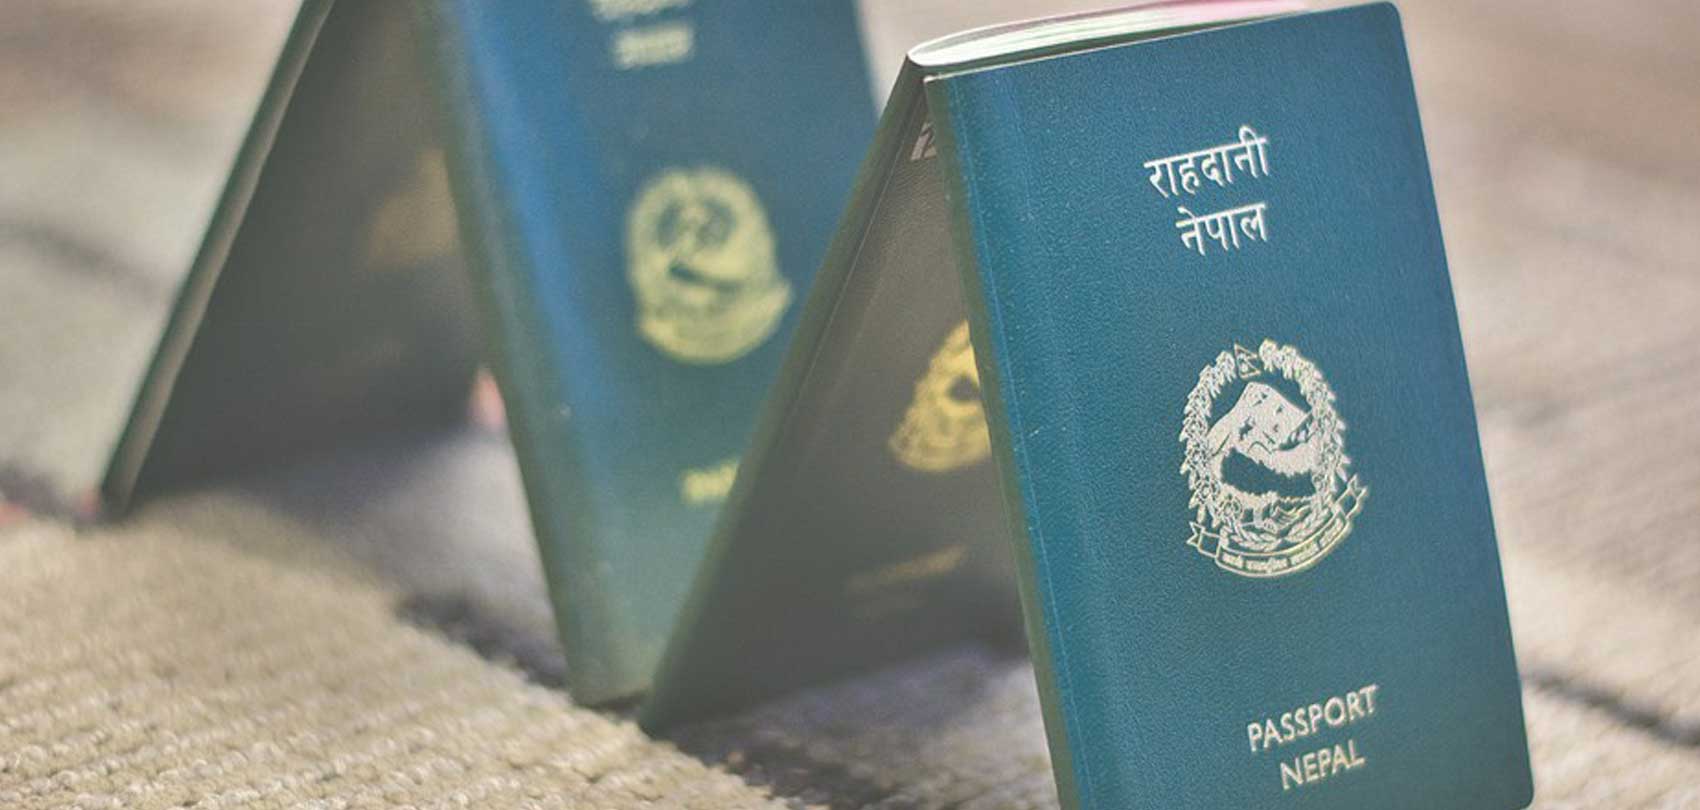 Vietnam visa requirement for Nepalese